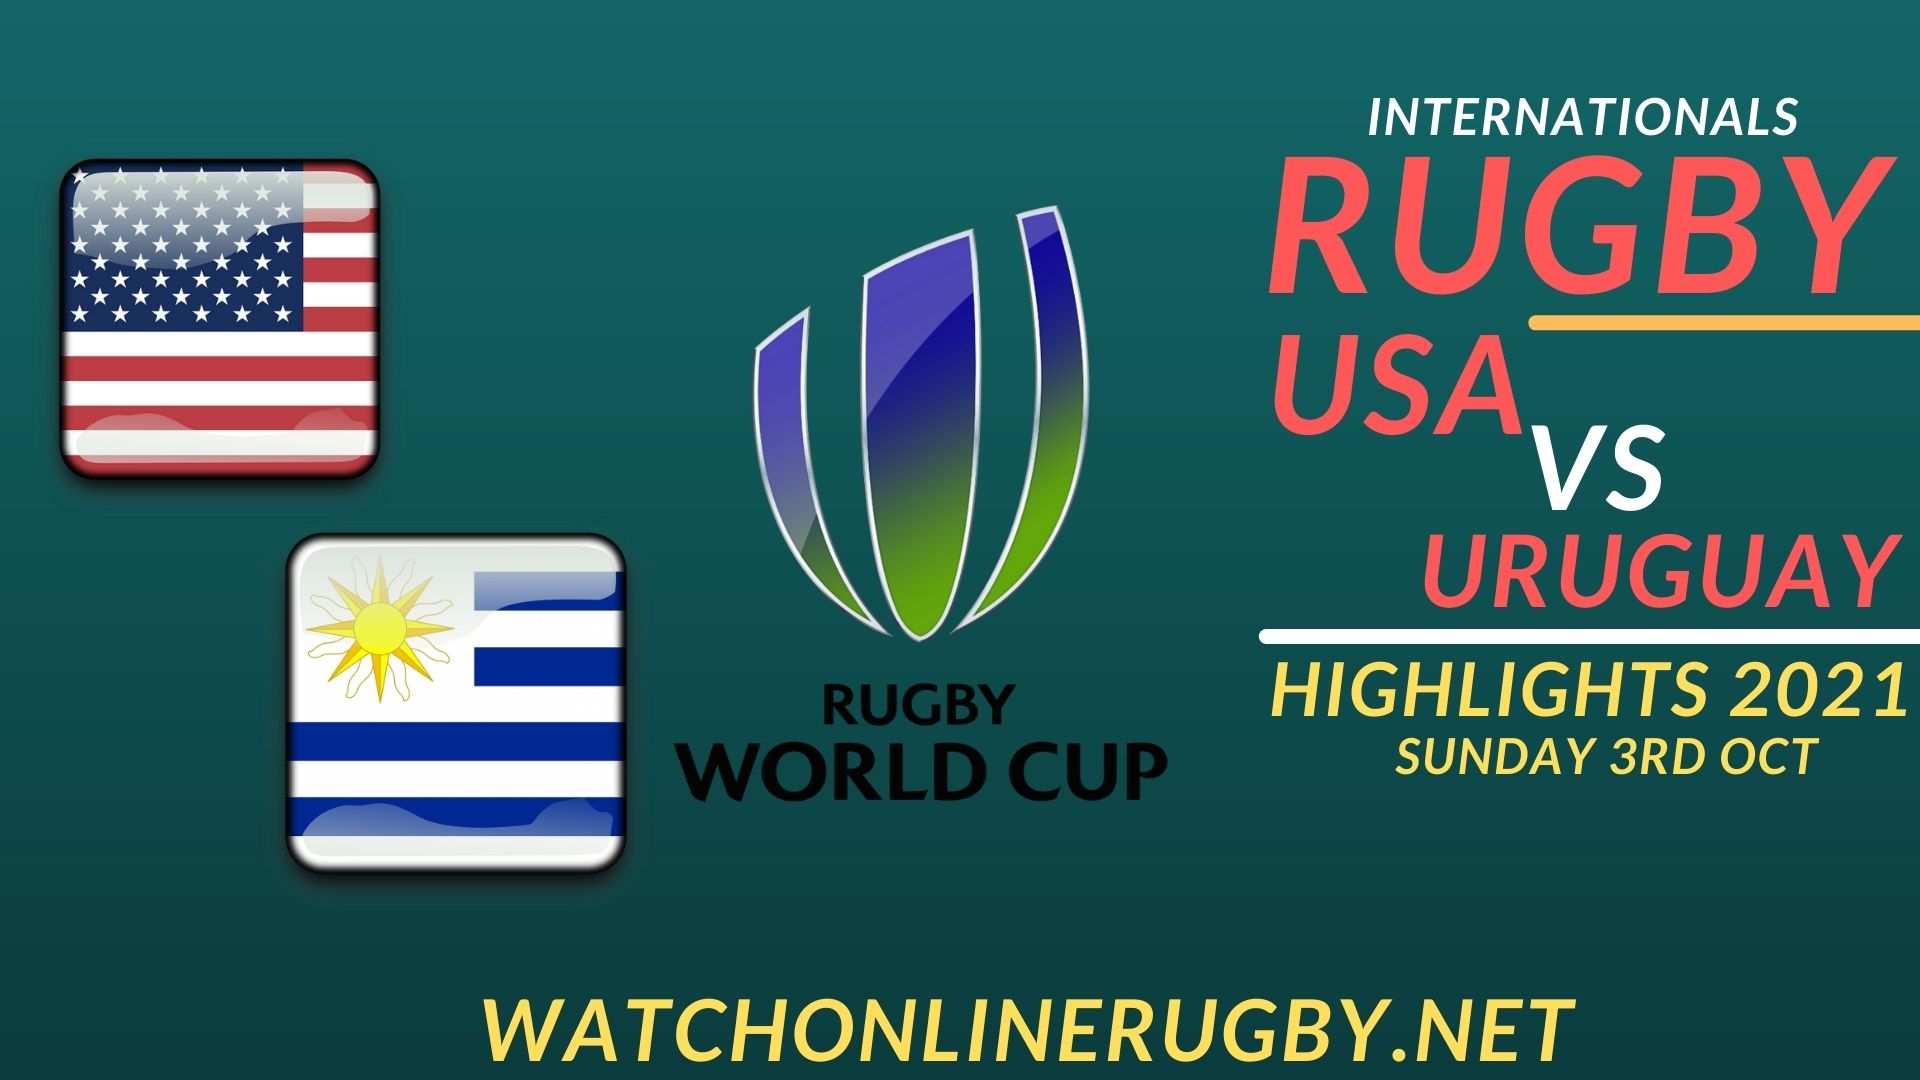 USA Vs Uruguay International Rugby 2021